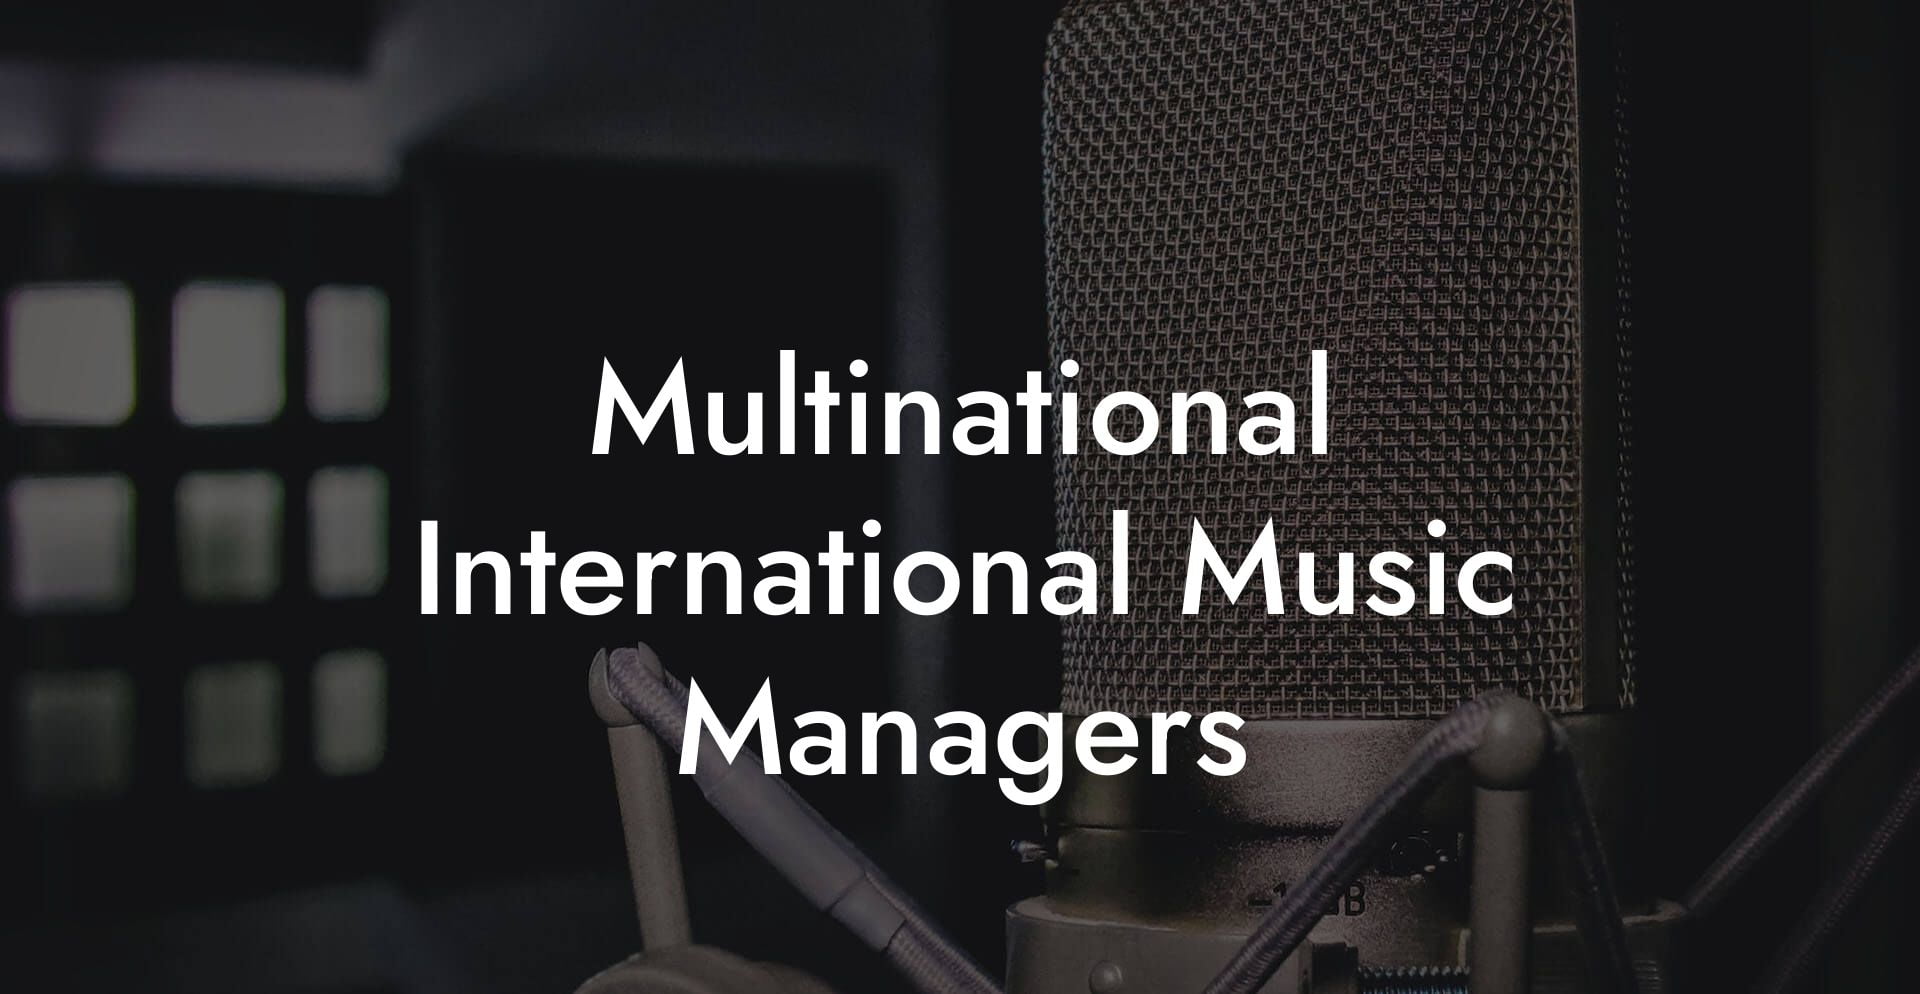 Multinational International Music Managers